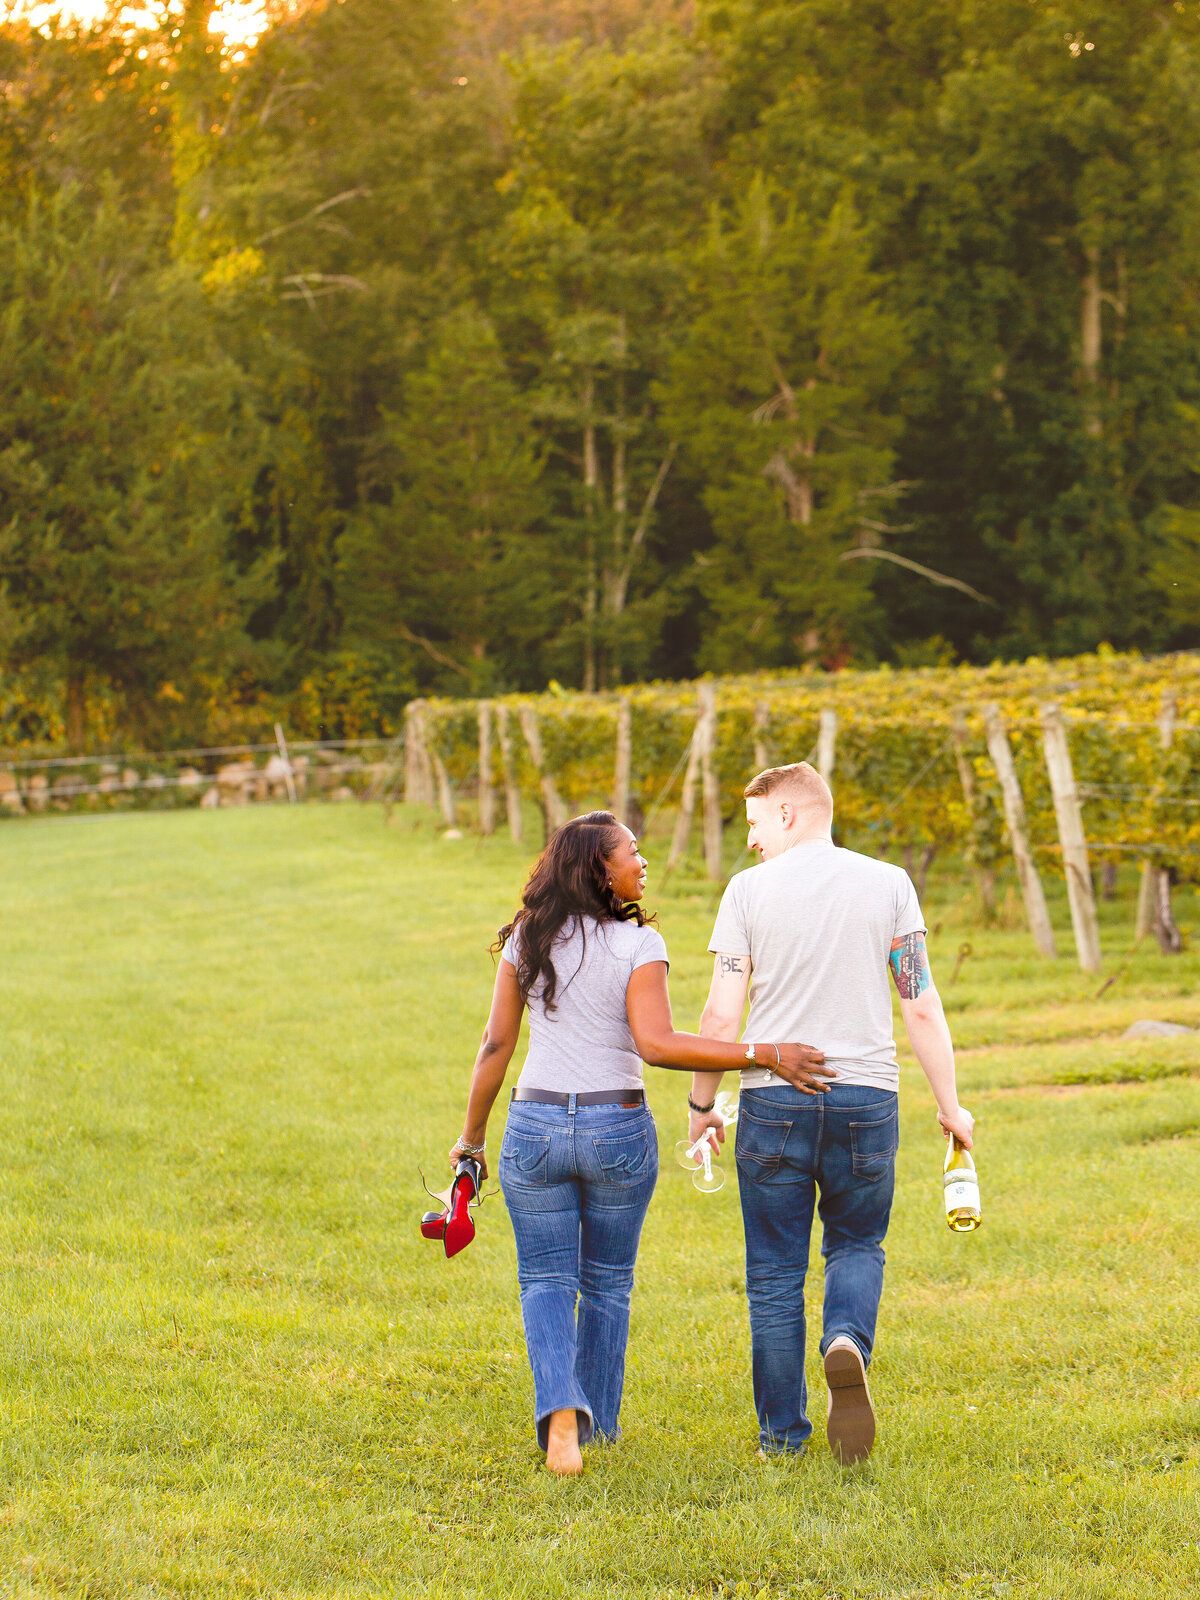 Woman walks barefoot through a vineyard with her fiancé.